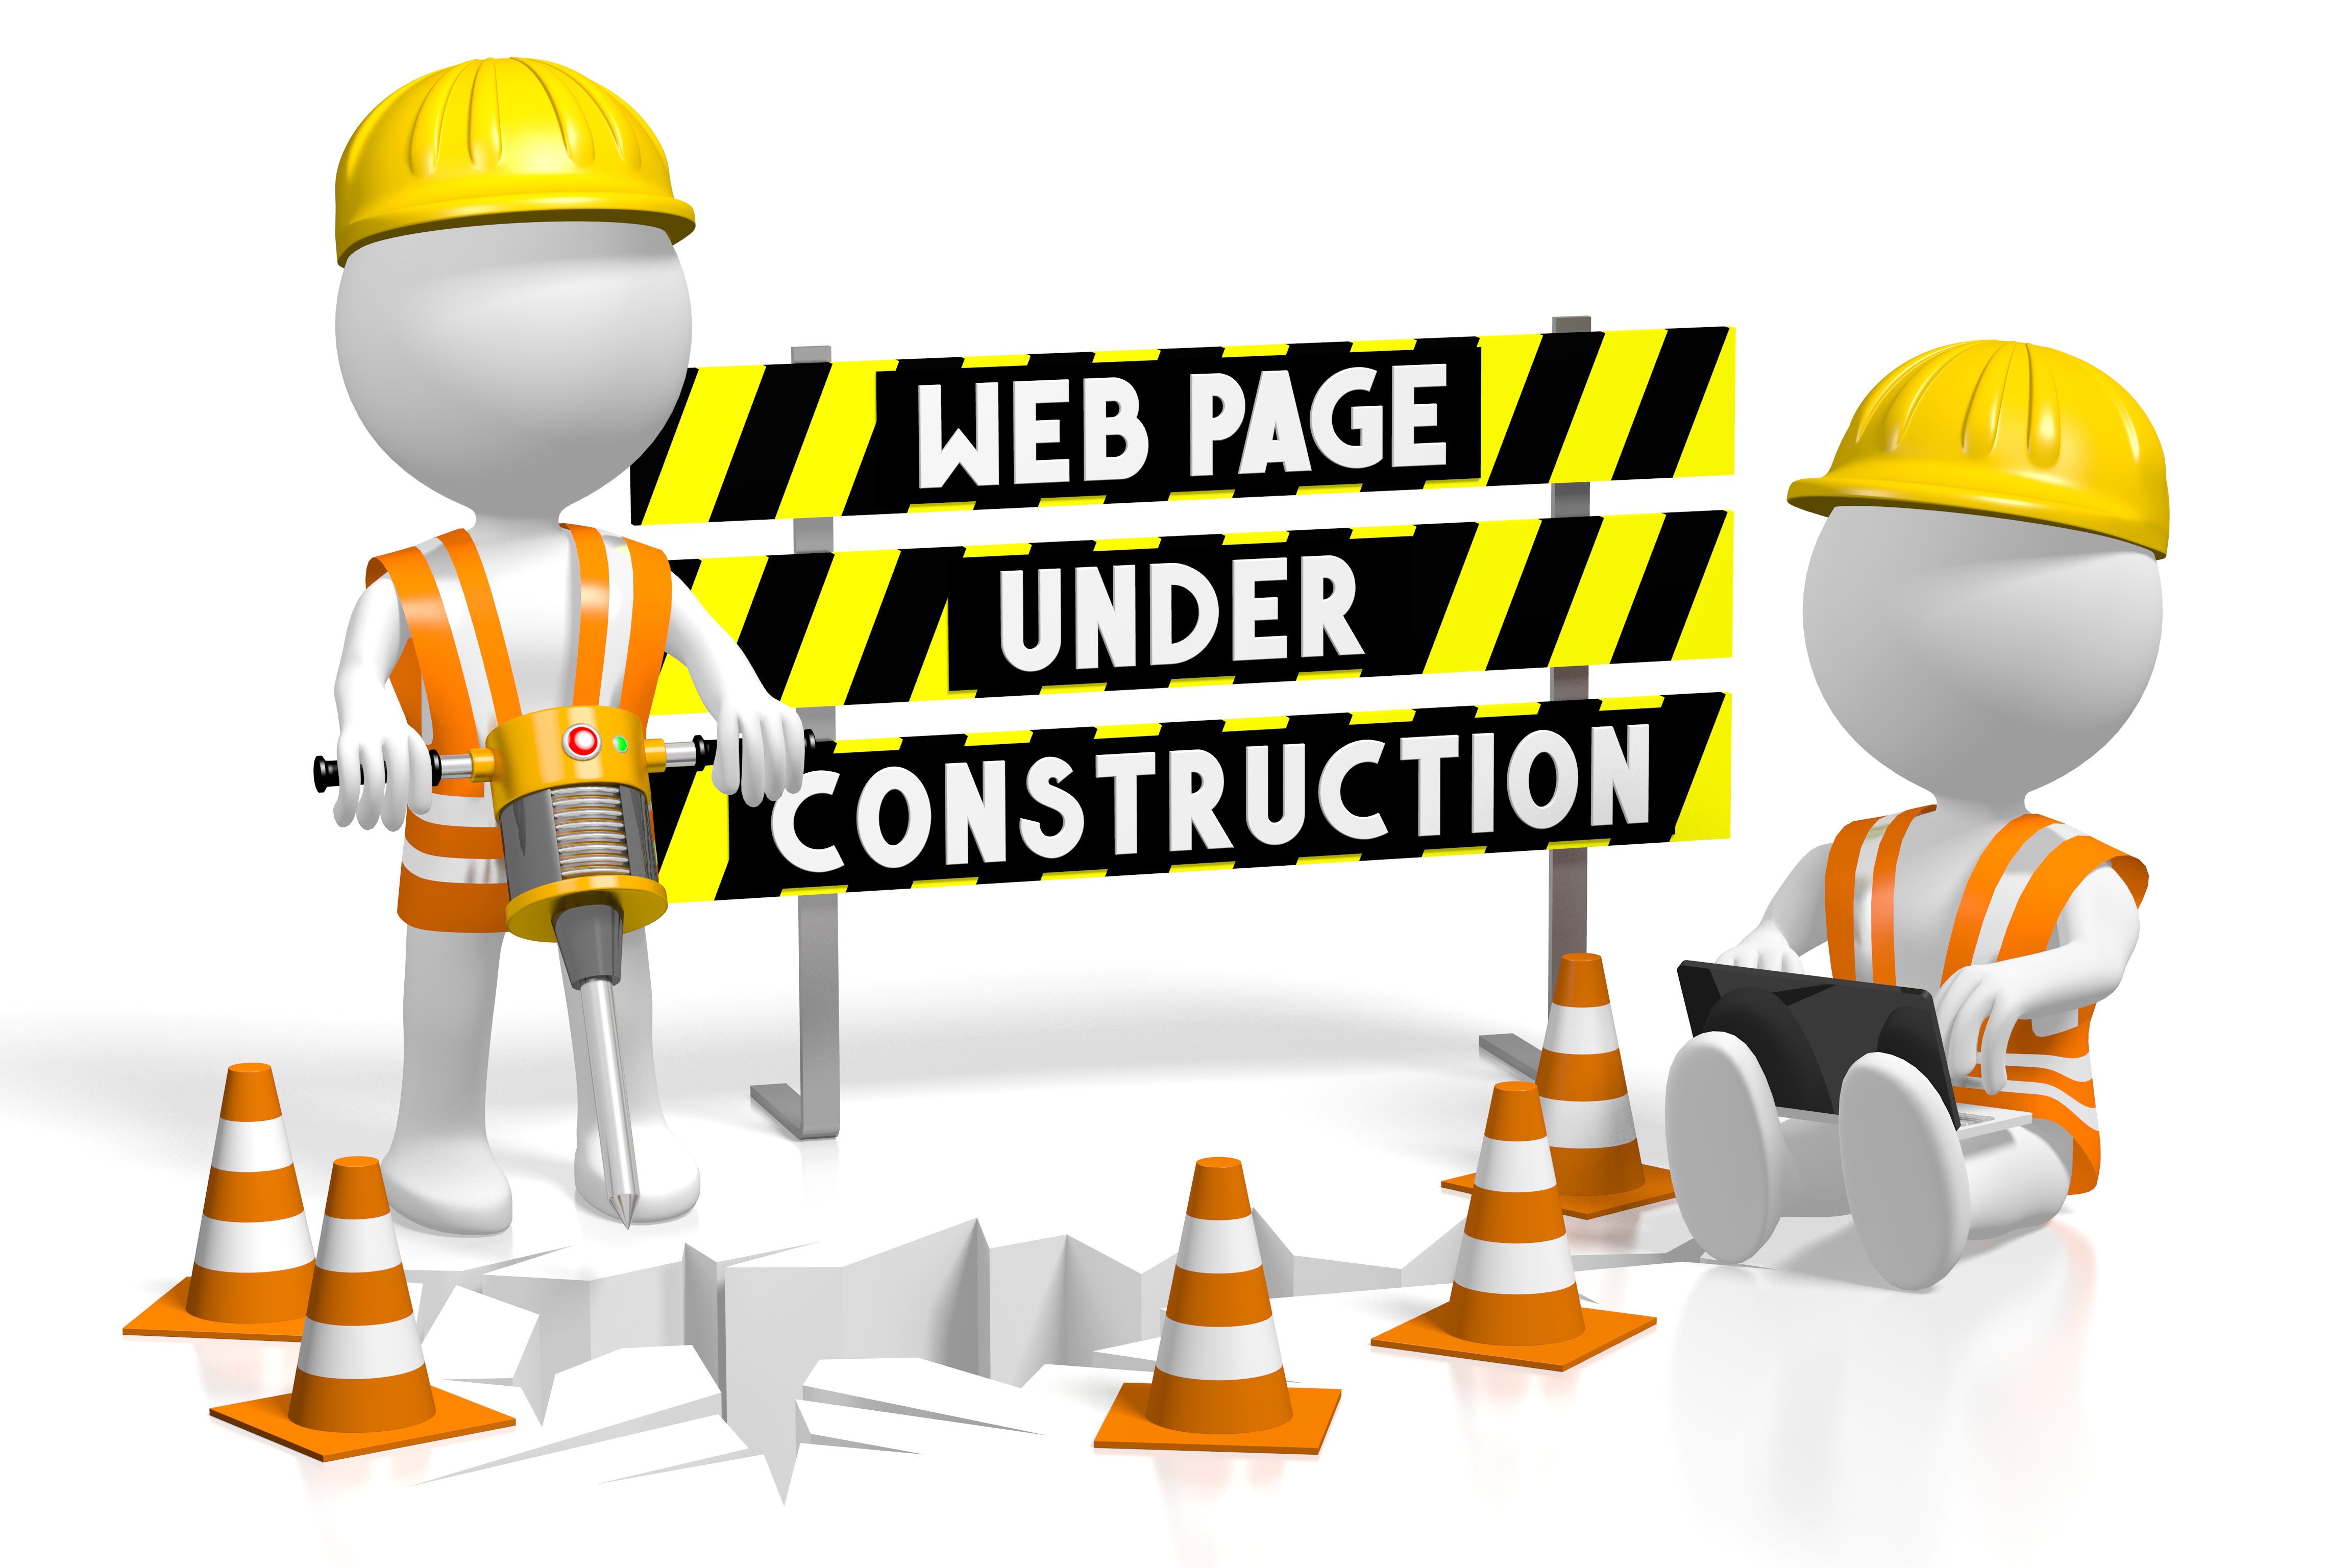 3D webpage under construction